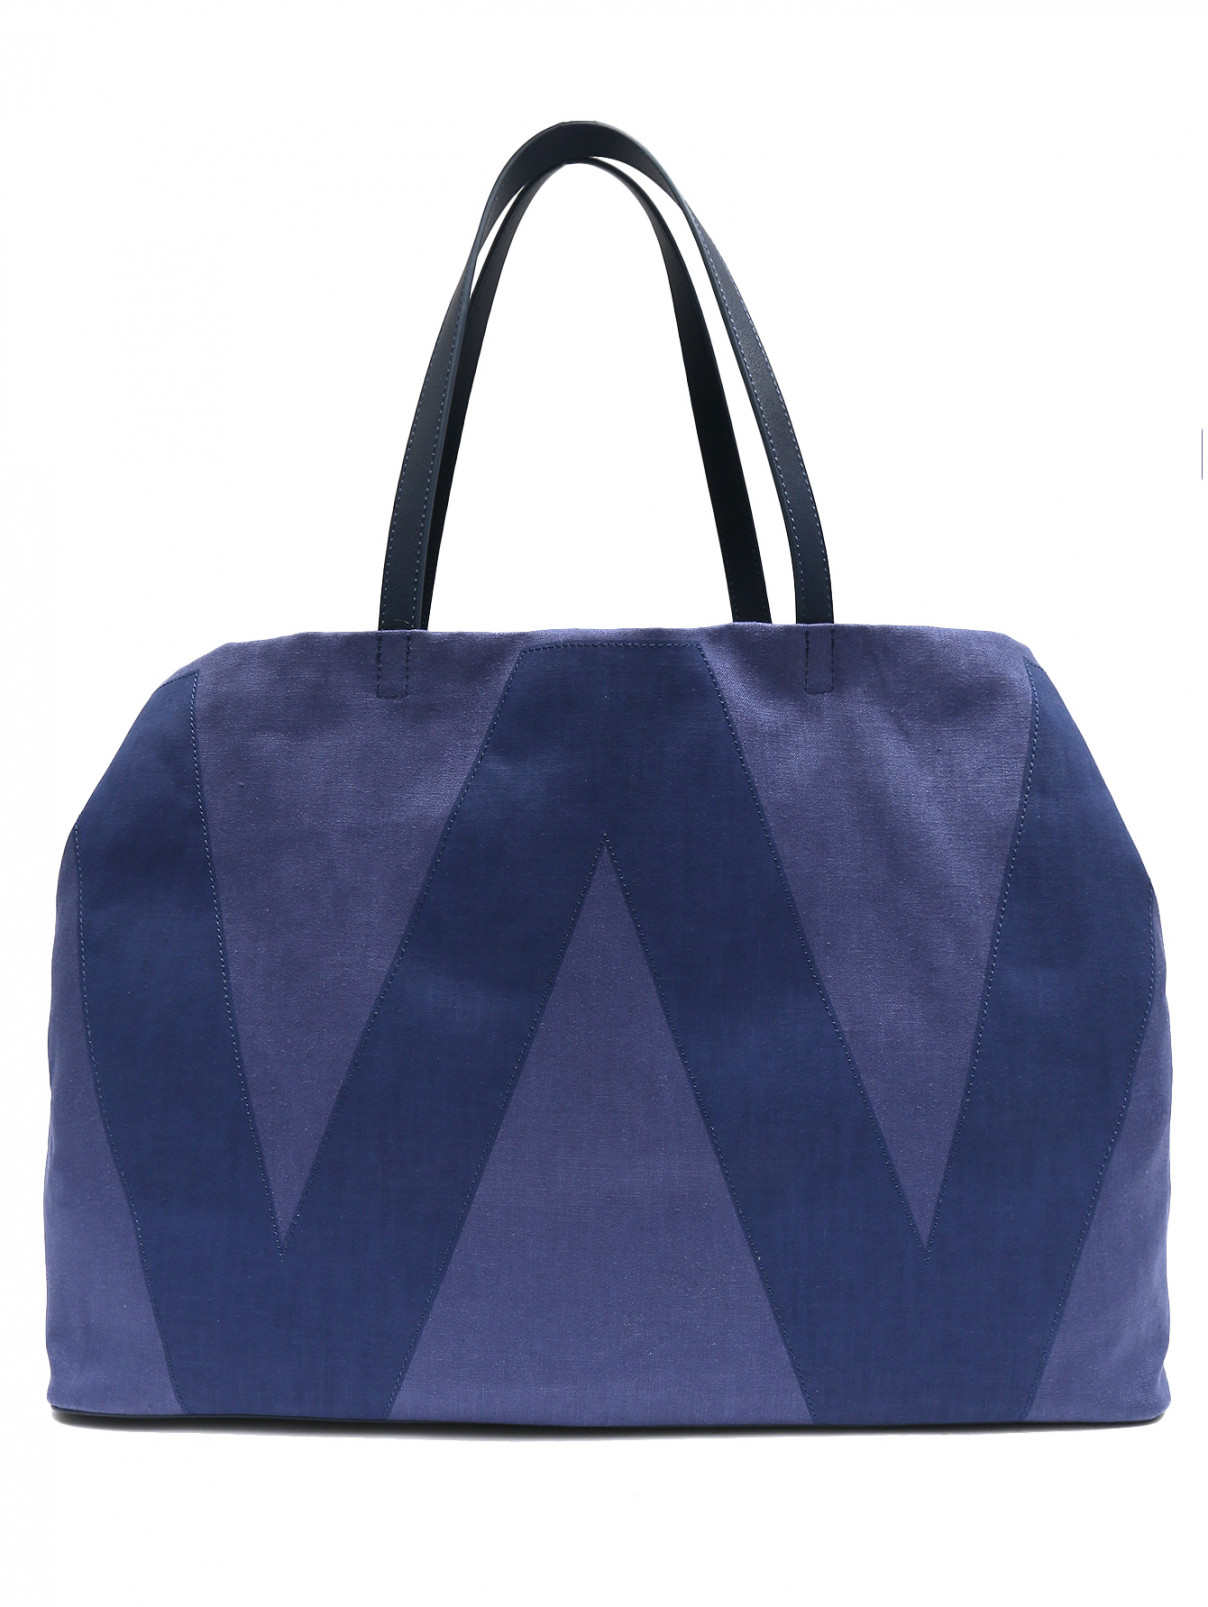 Объемная сумка из текстиля Weekend Max Mara  –  Общий вид  – Цвет:  Синий